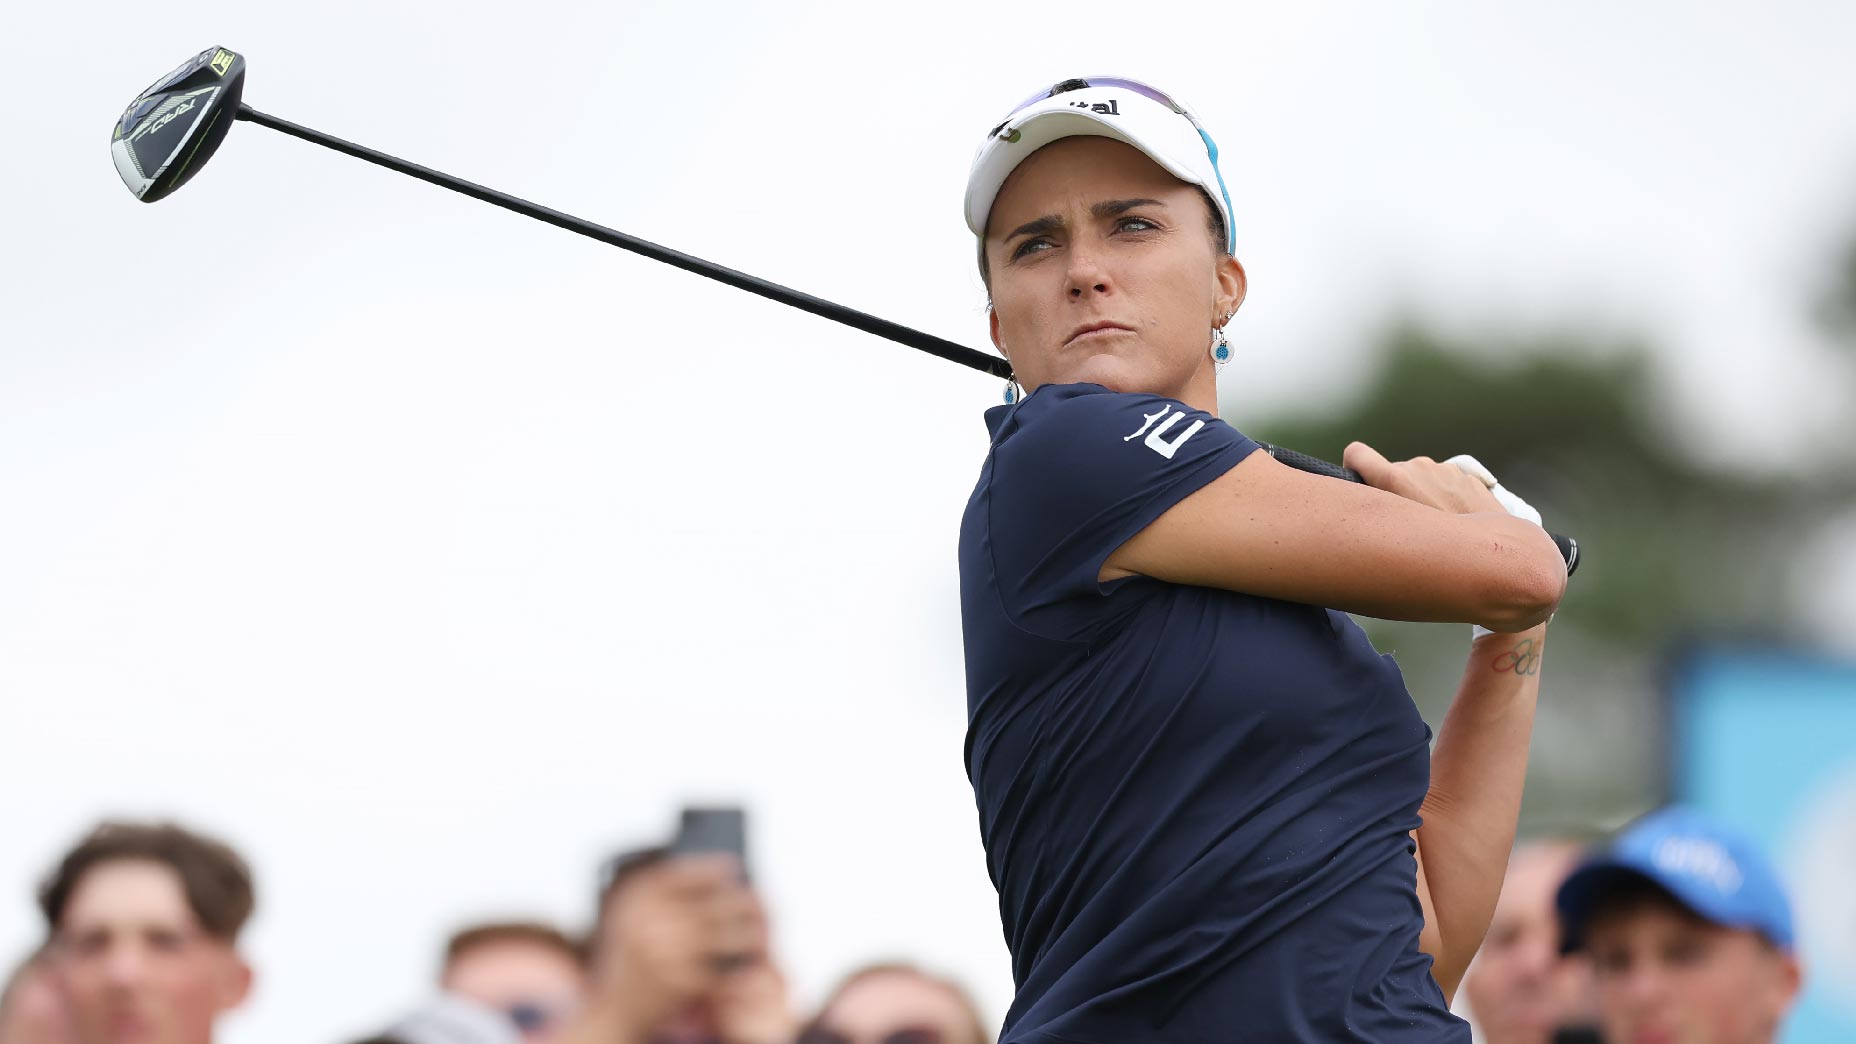 LPGA Star Lexi Thompson to Make PGA Tour Debut at 2023 Shriners